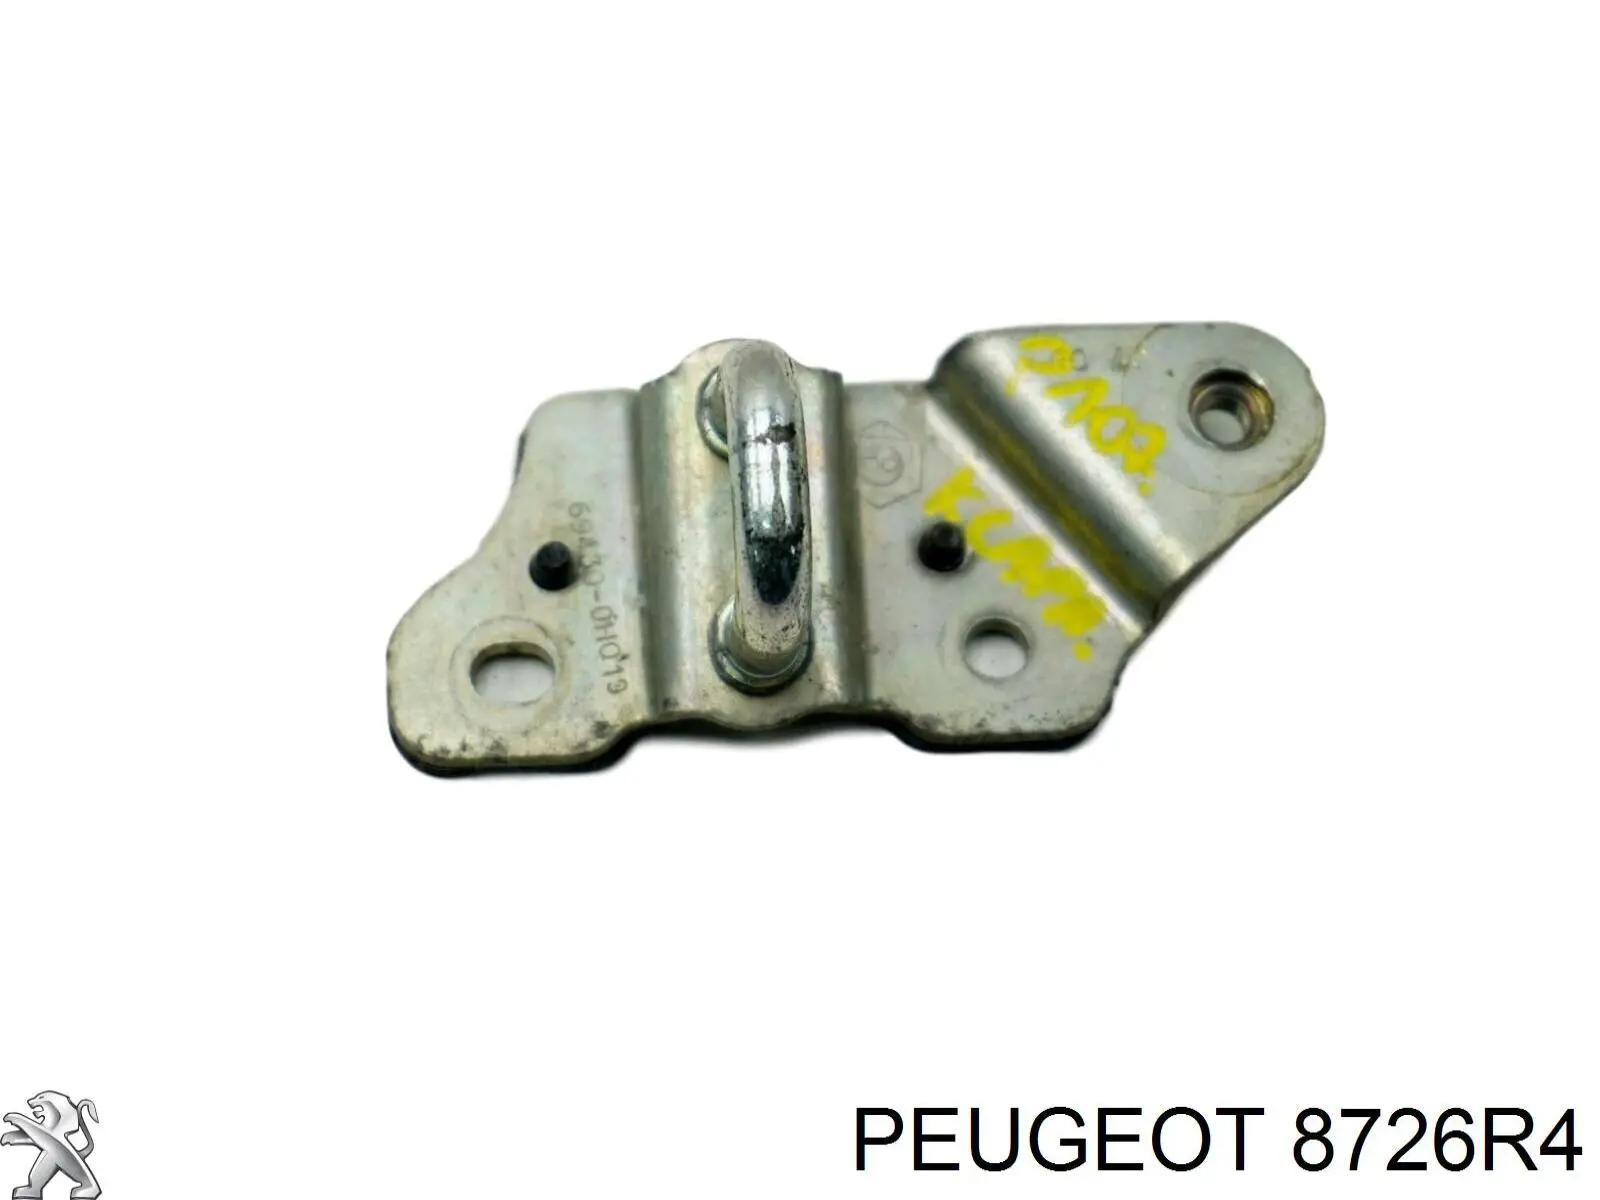 Cable de accionamiento, desbloqueo de puerta trasera 8726R4 Peugeot/Citroen